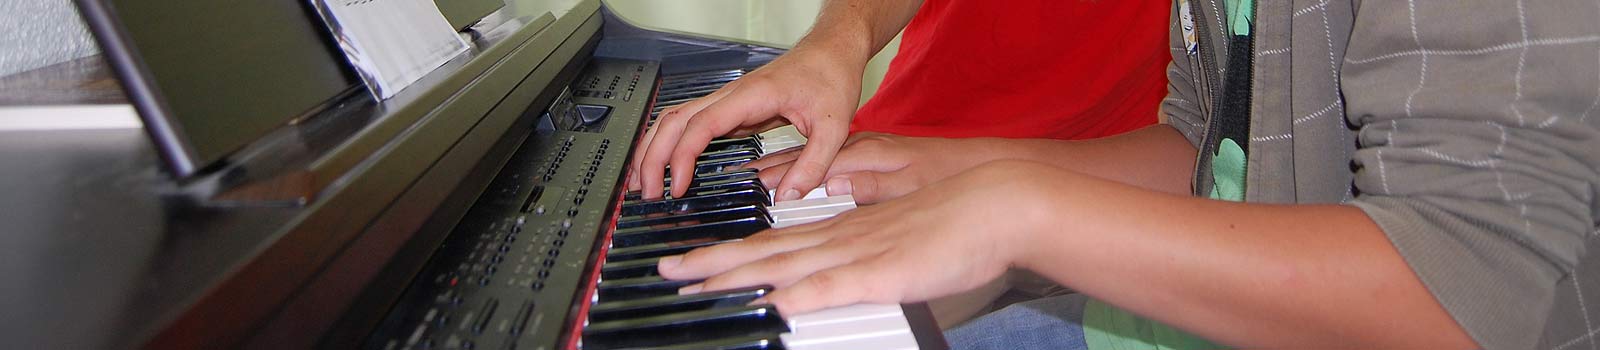 Keyboard / E-Piano spielen lernen